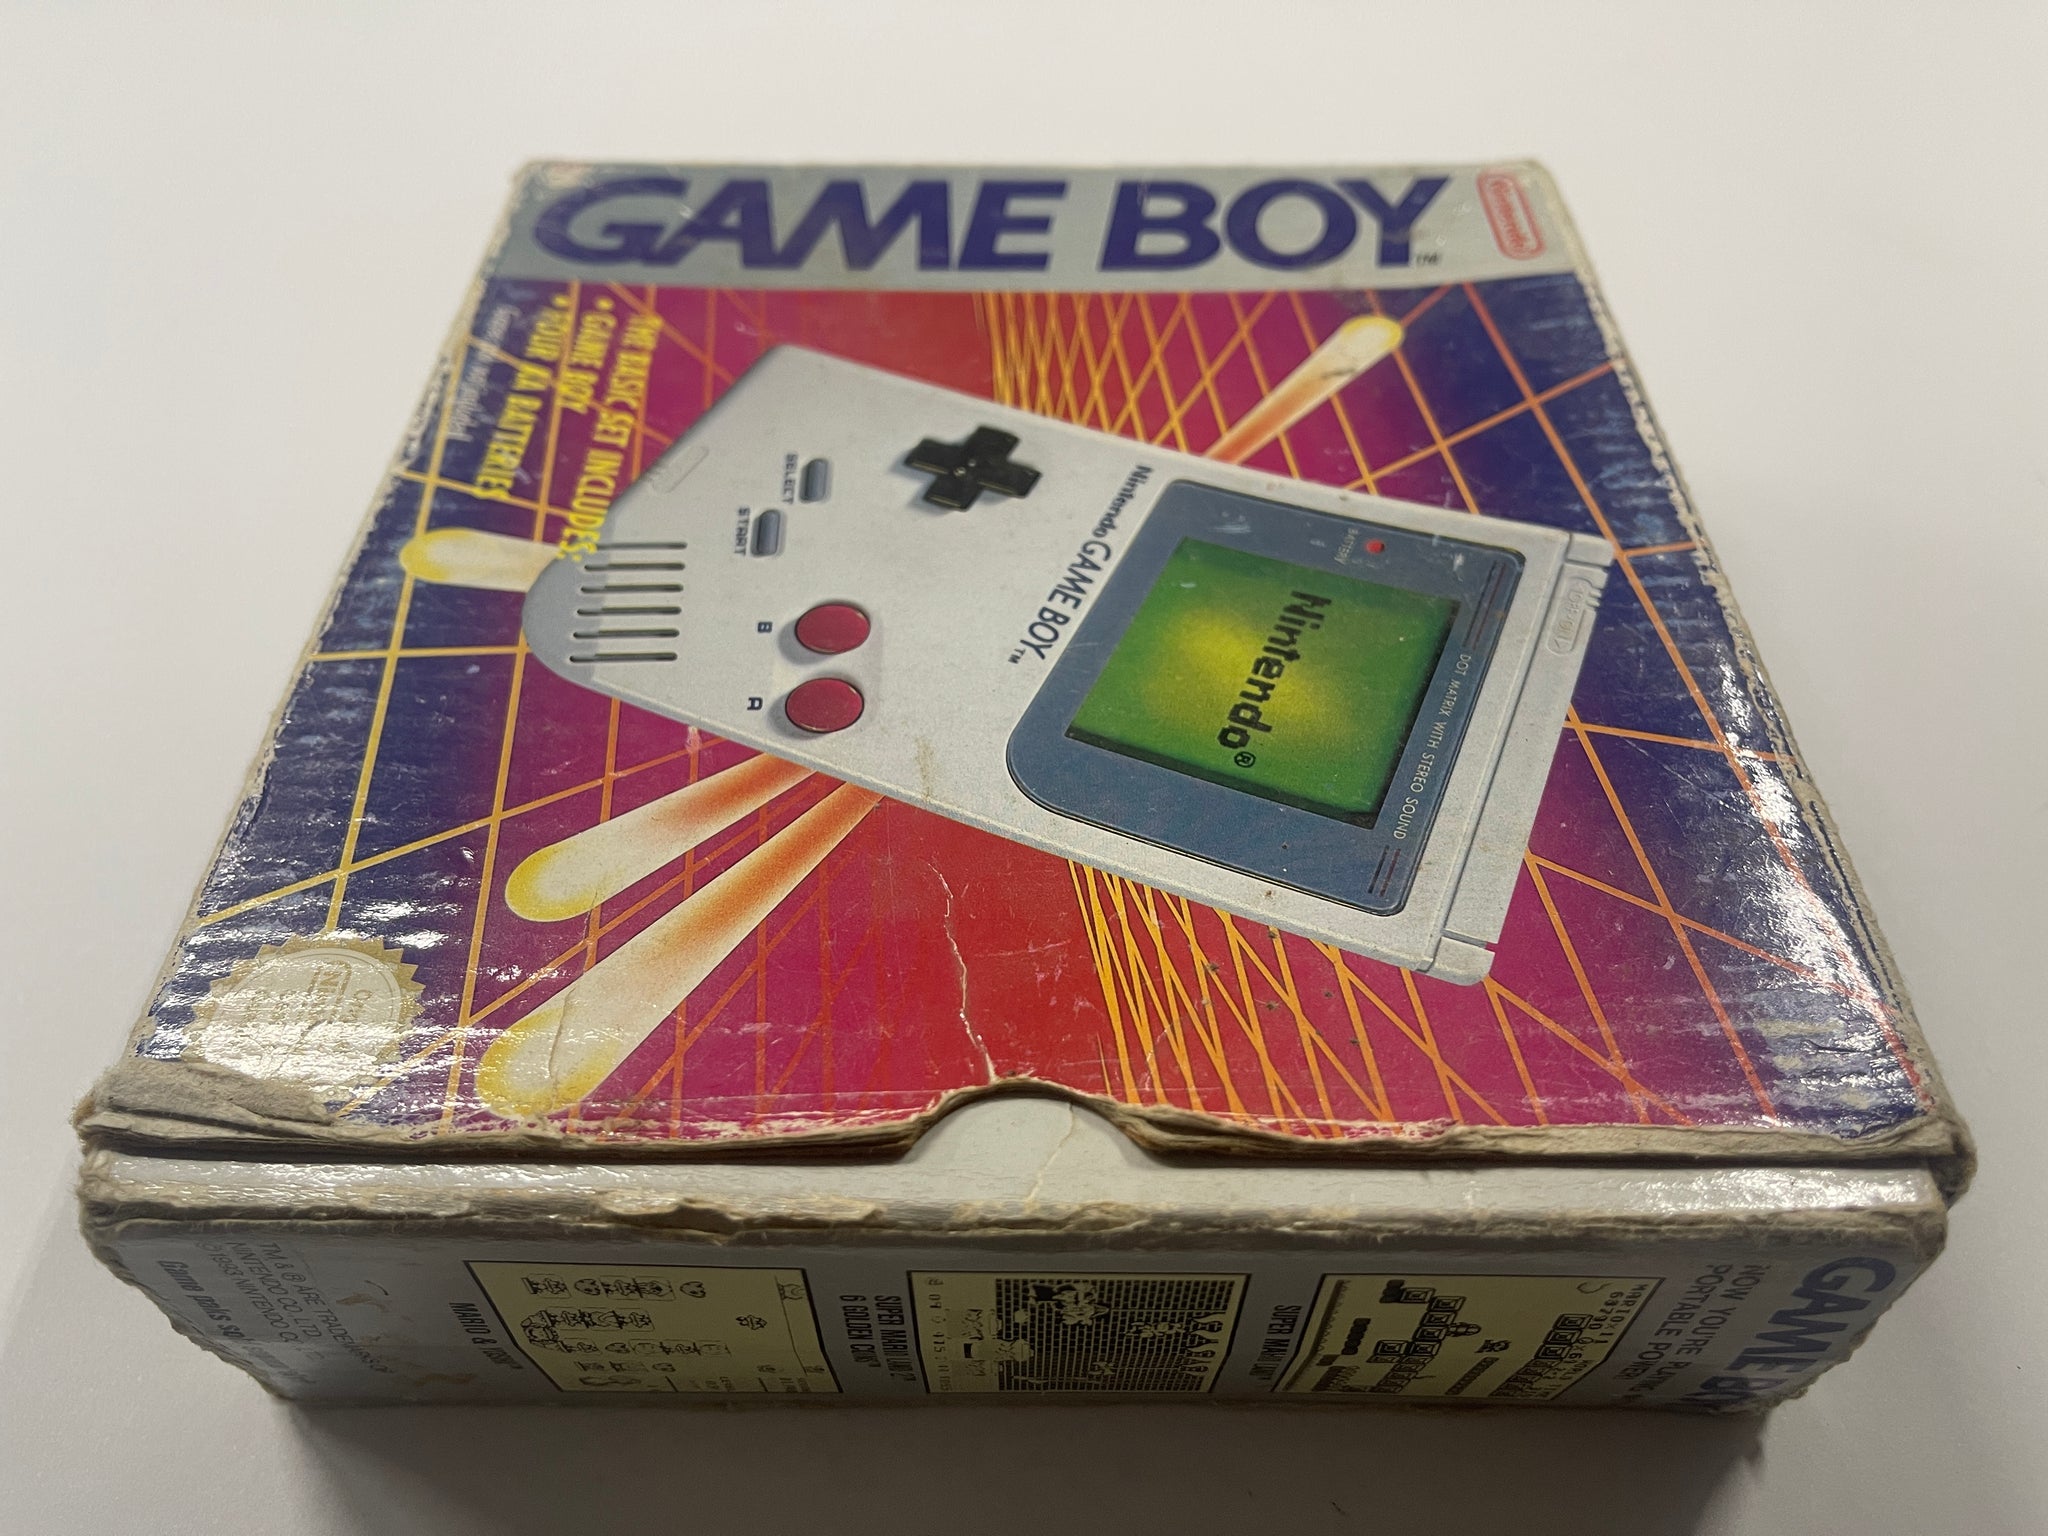 Original Nintendo DMG Gameboy Complete In Box